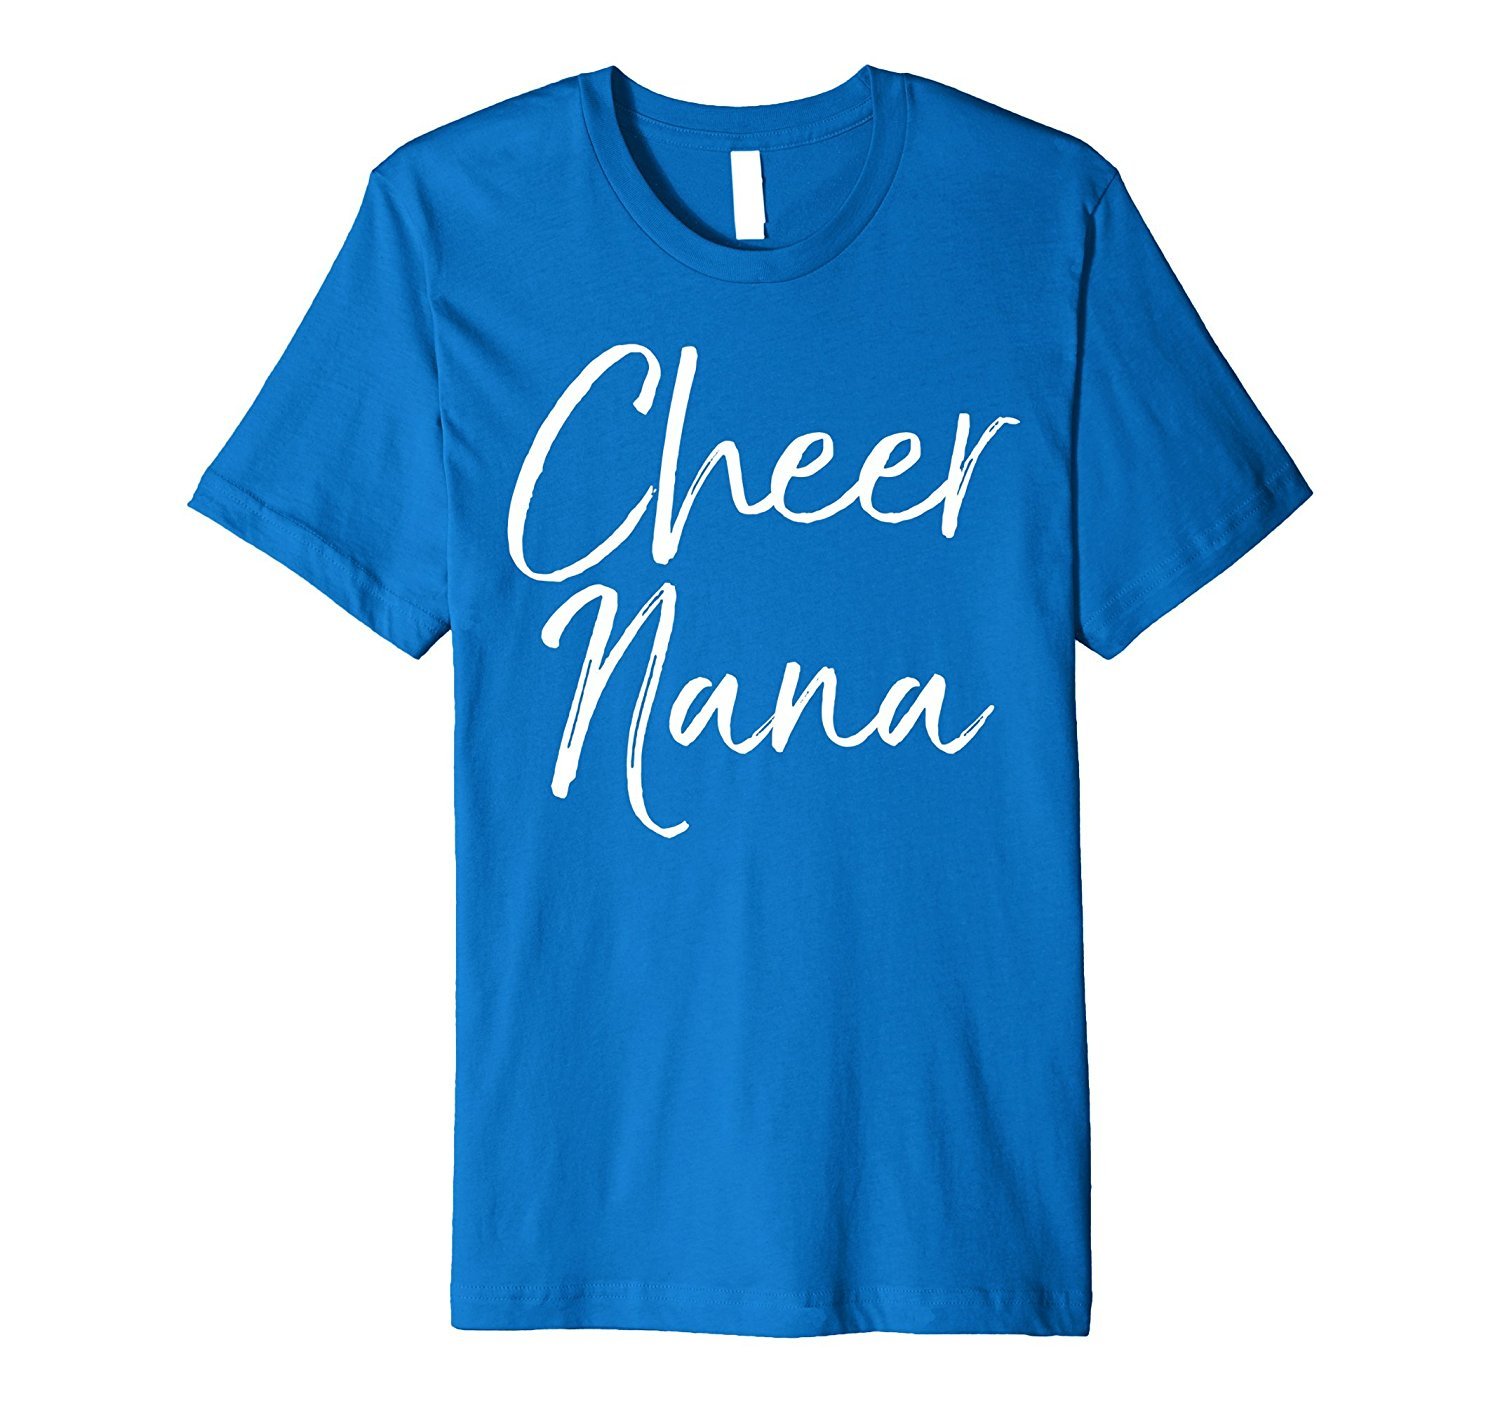 Cheer Nana Shirt 1 